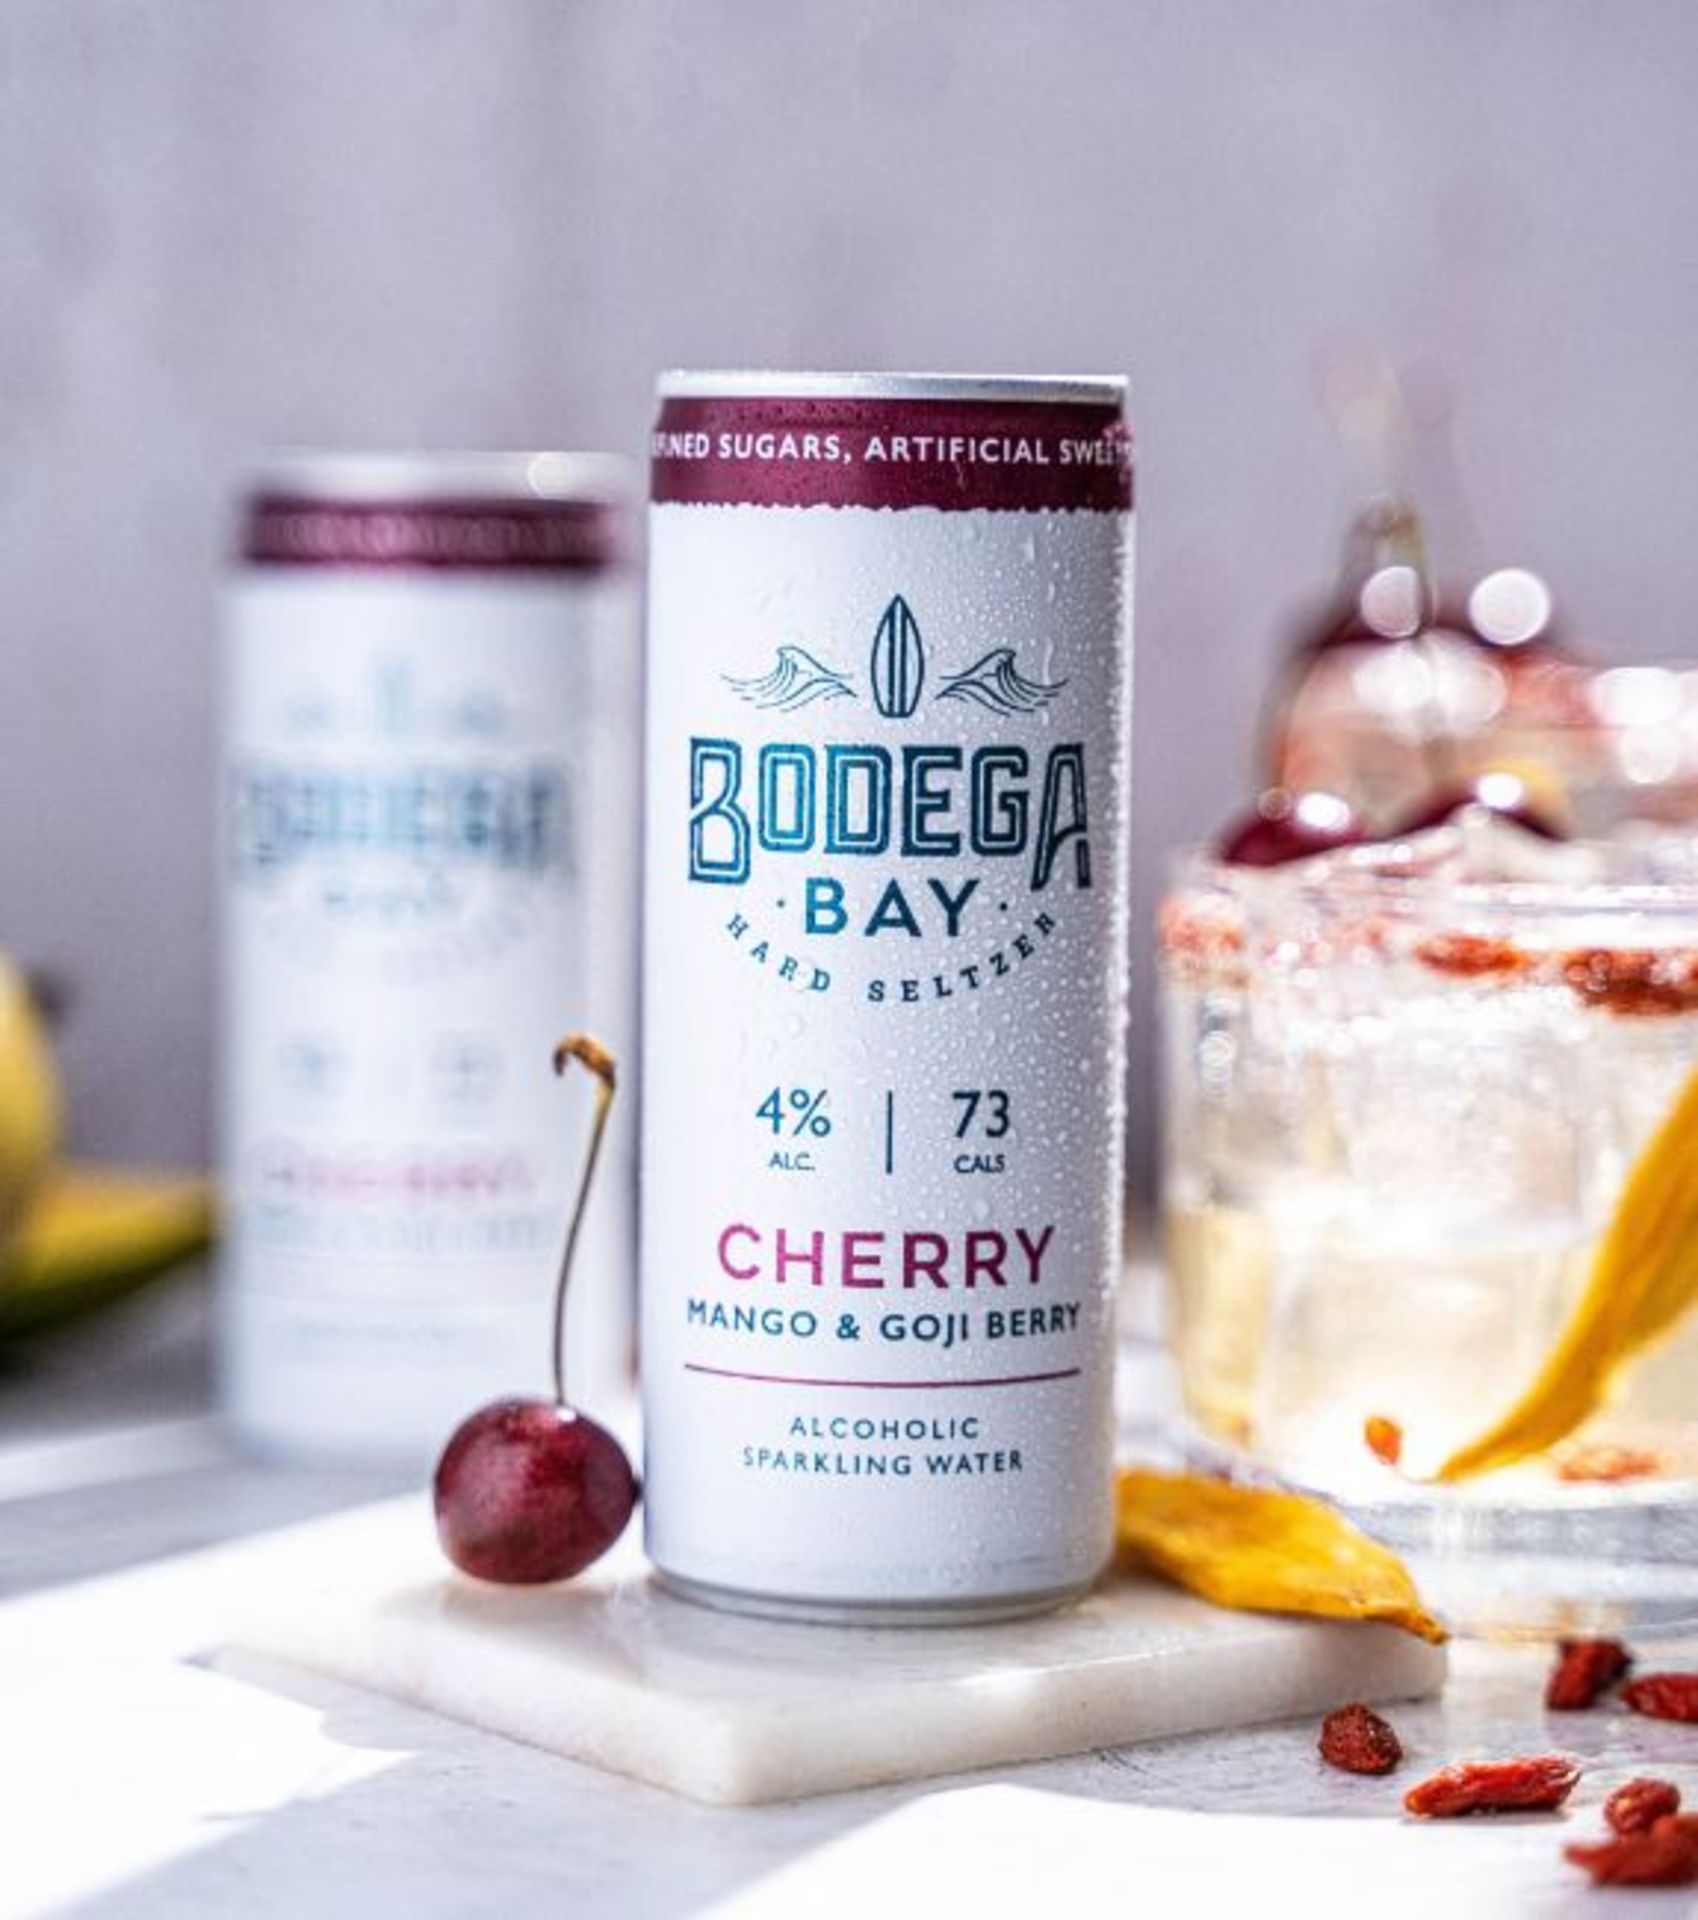 24 x Bodega Bay Hard Seltzer 250ml Alcoholic Sparkling Water Drinks - Cherry Mango & Goji Berry - Image 2 of 7